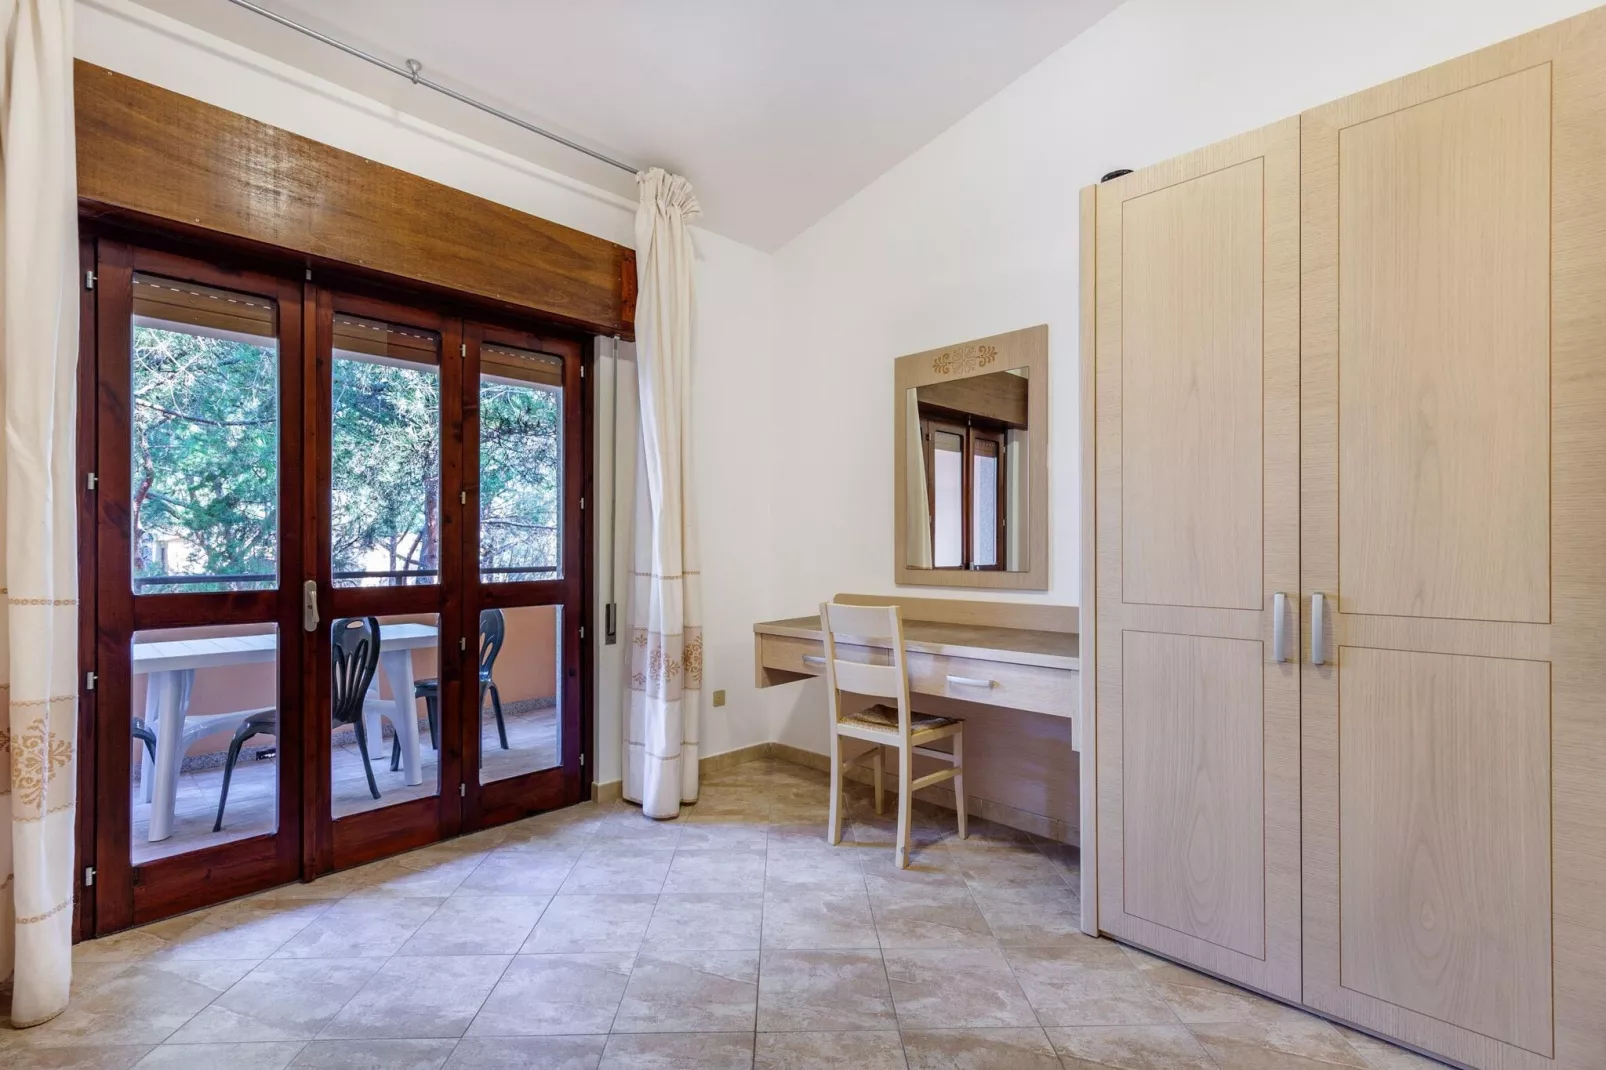 Holiday residence Baia Verde, Valledoria-1 Bedroom Prestige im EG oder 1 St. mit Balkon o T-Woonkamer